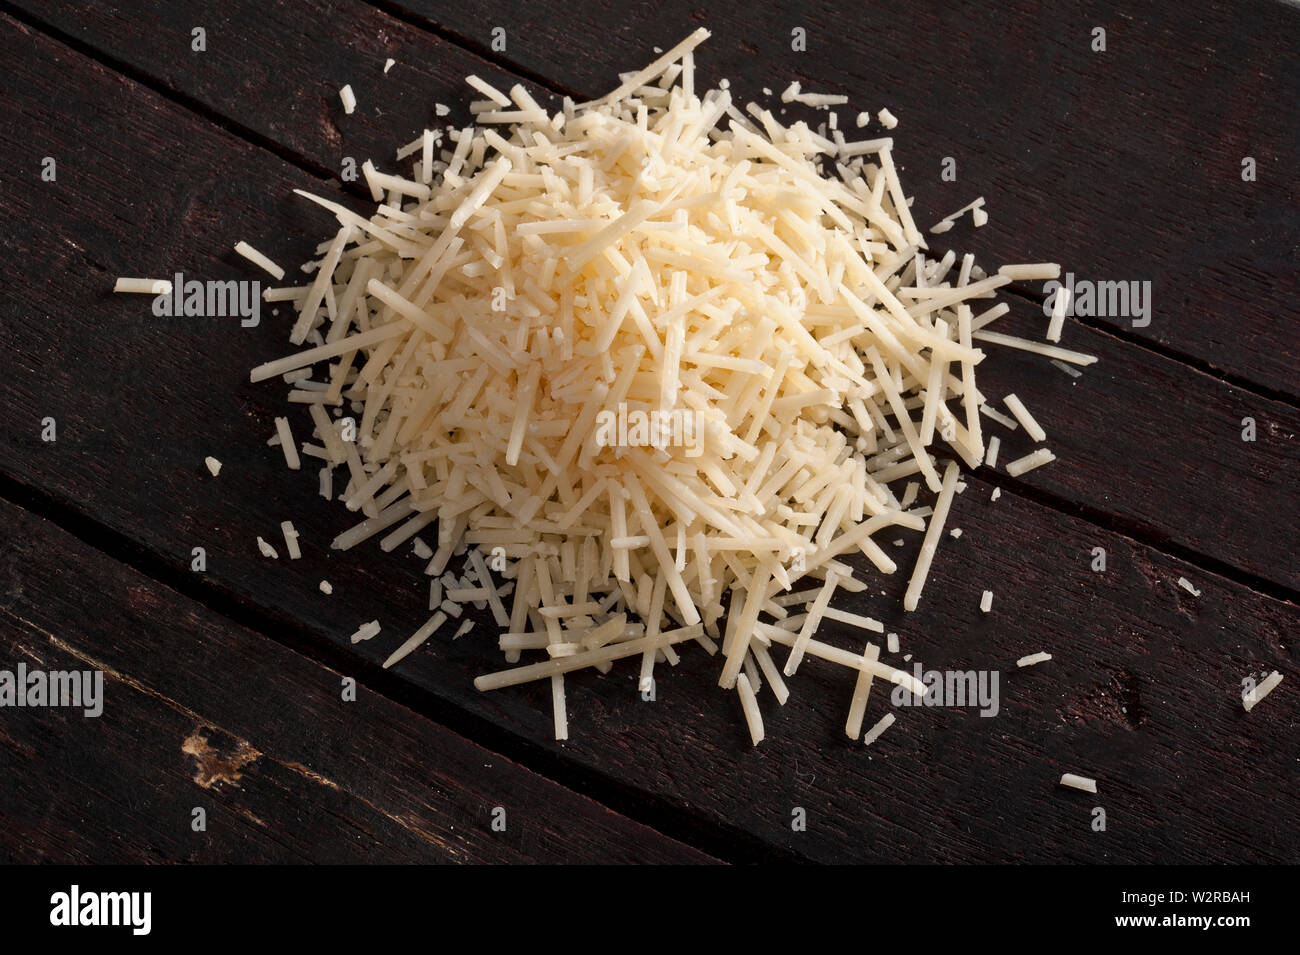 https://c8.alamy.com/comp/W2RBAH/shredded-cheese-W2RBAH.jpg